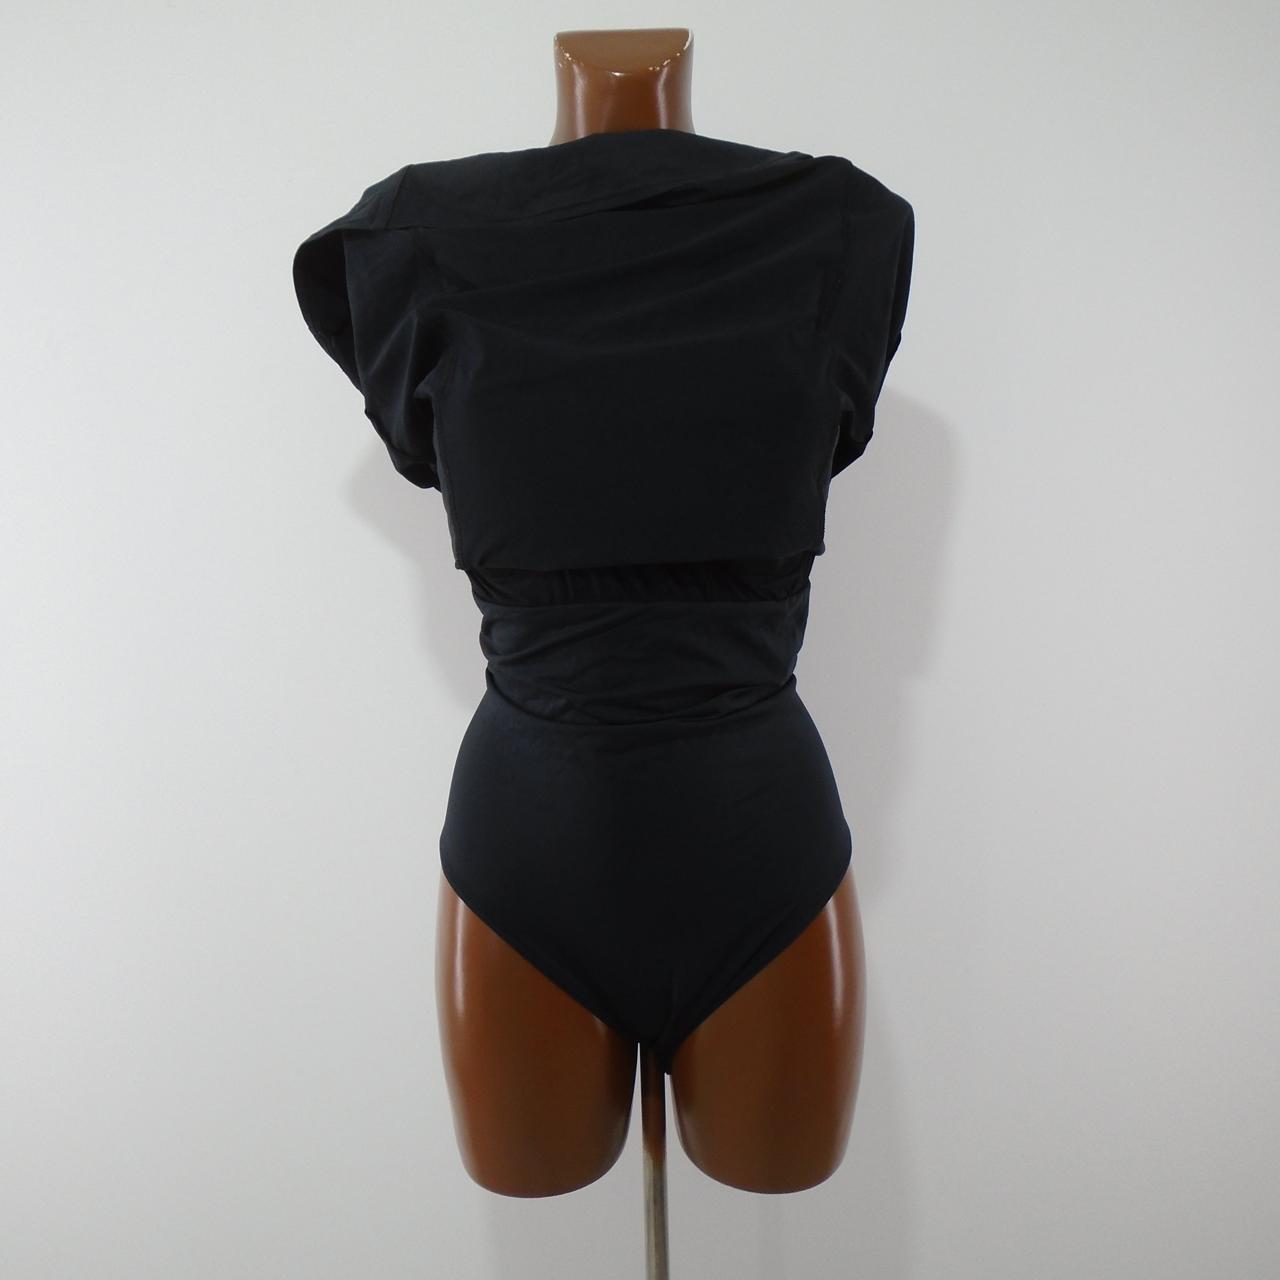 Women's Swimsuit Calvin Klein. Black. XL. Used. Good